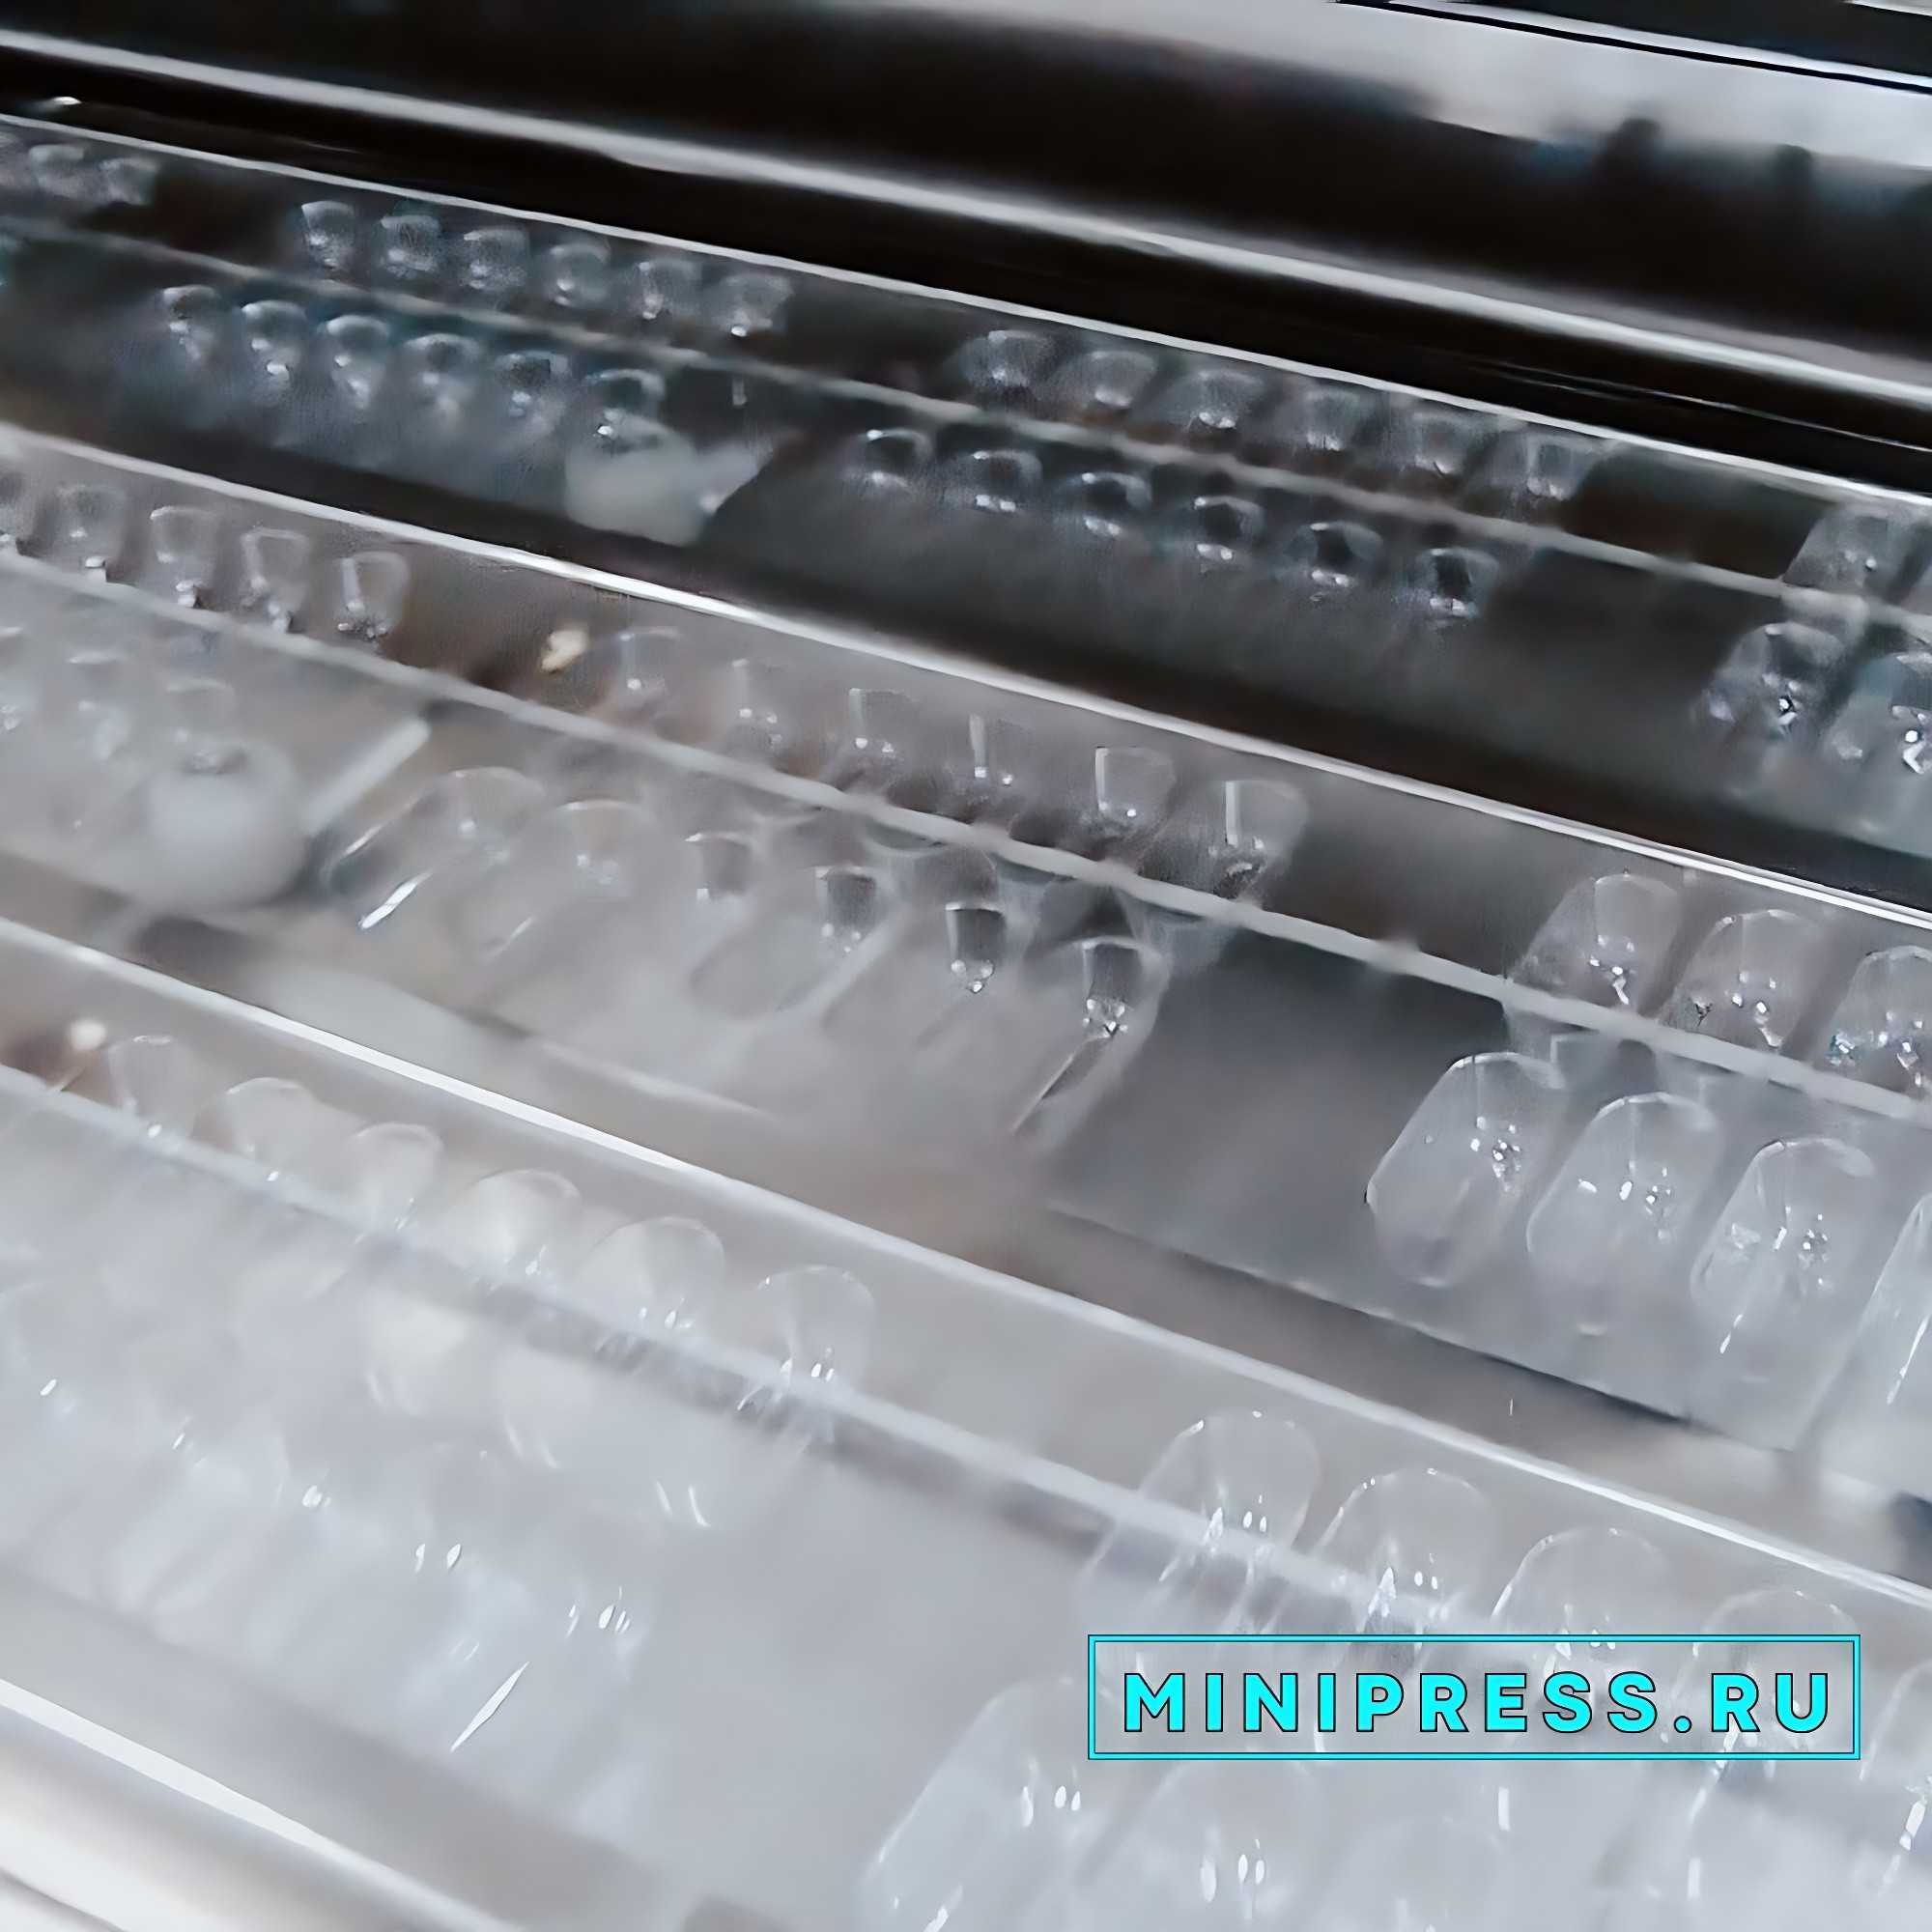 laboratory glass heat-resistant